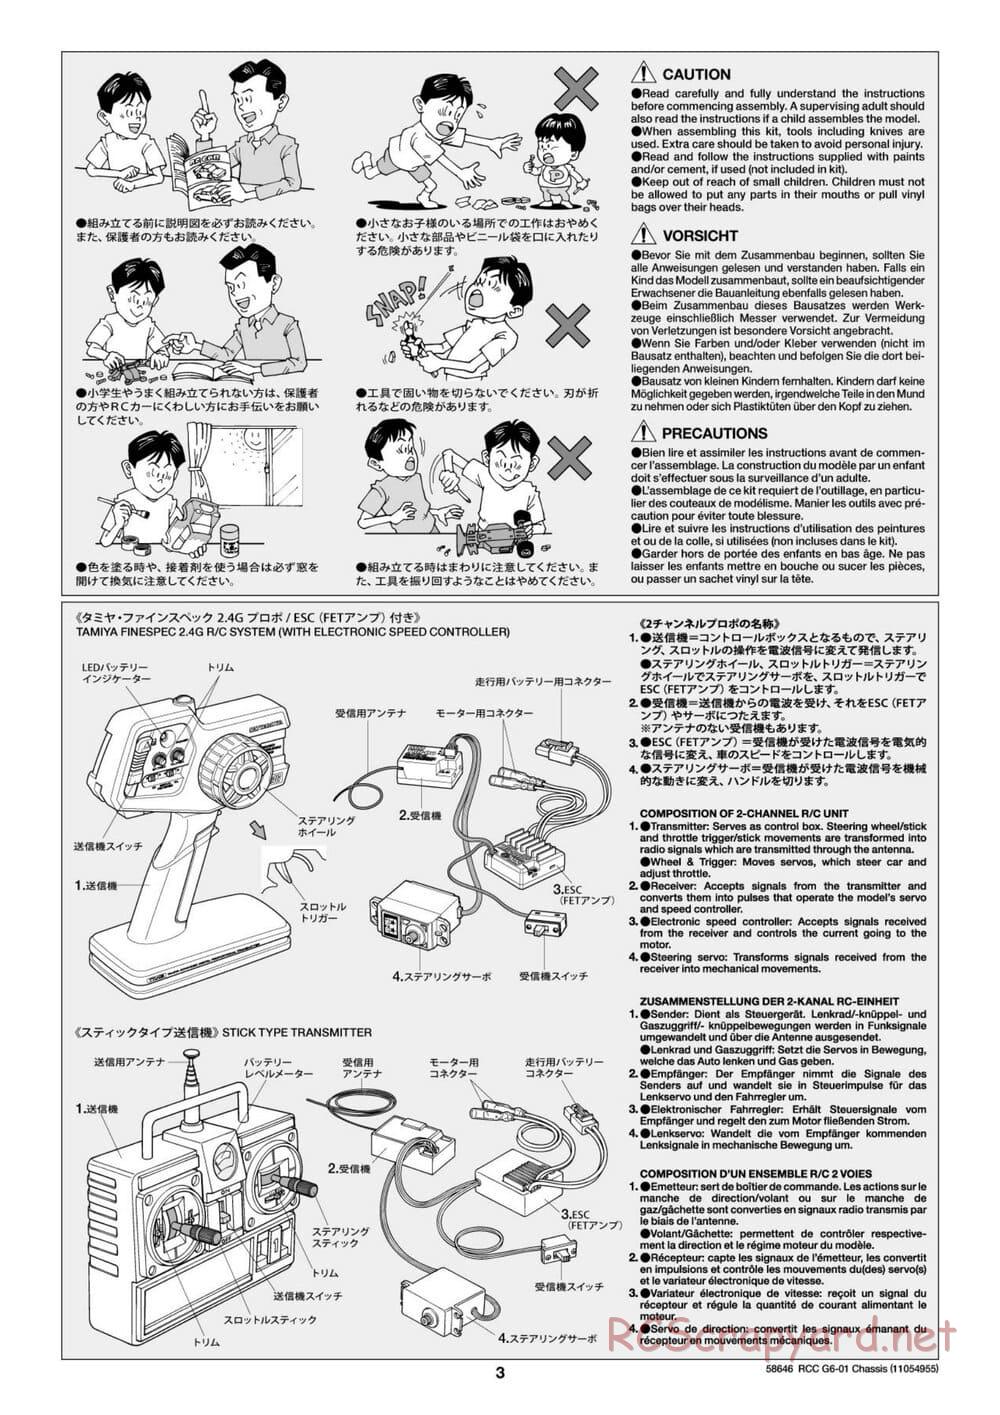 Tamiya - Konghead 6x6 - G6-01 Chassis - Manual - Page 3